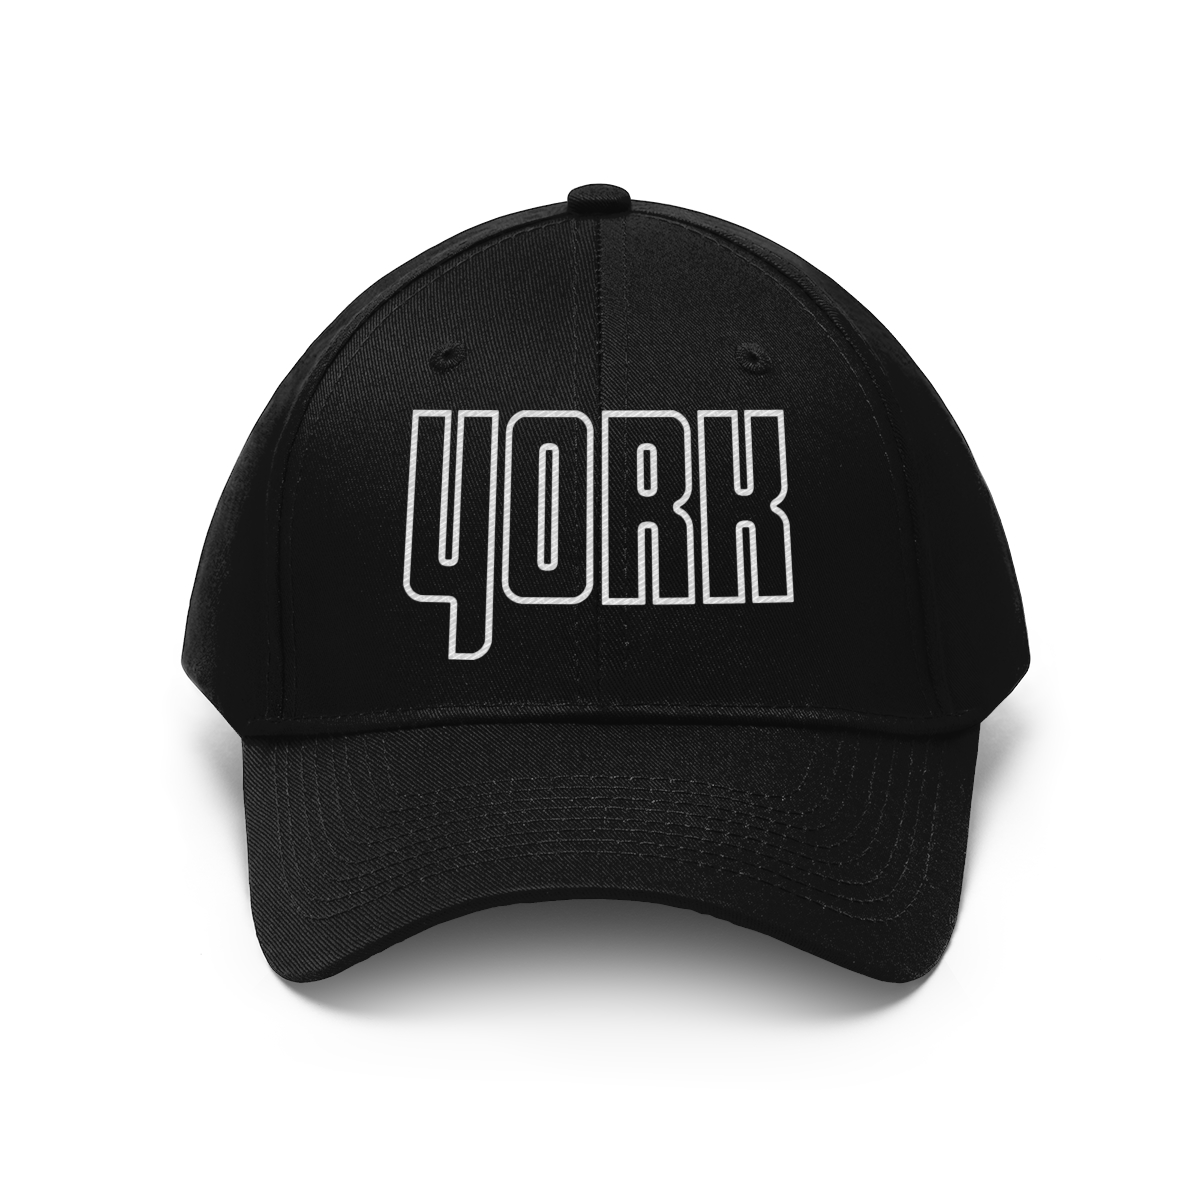 York Cap product thumbnail image